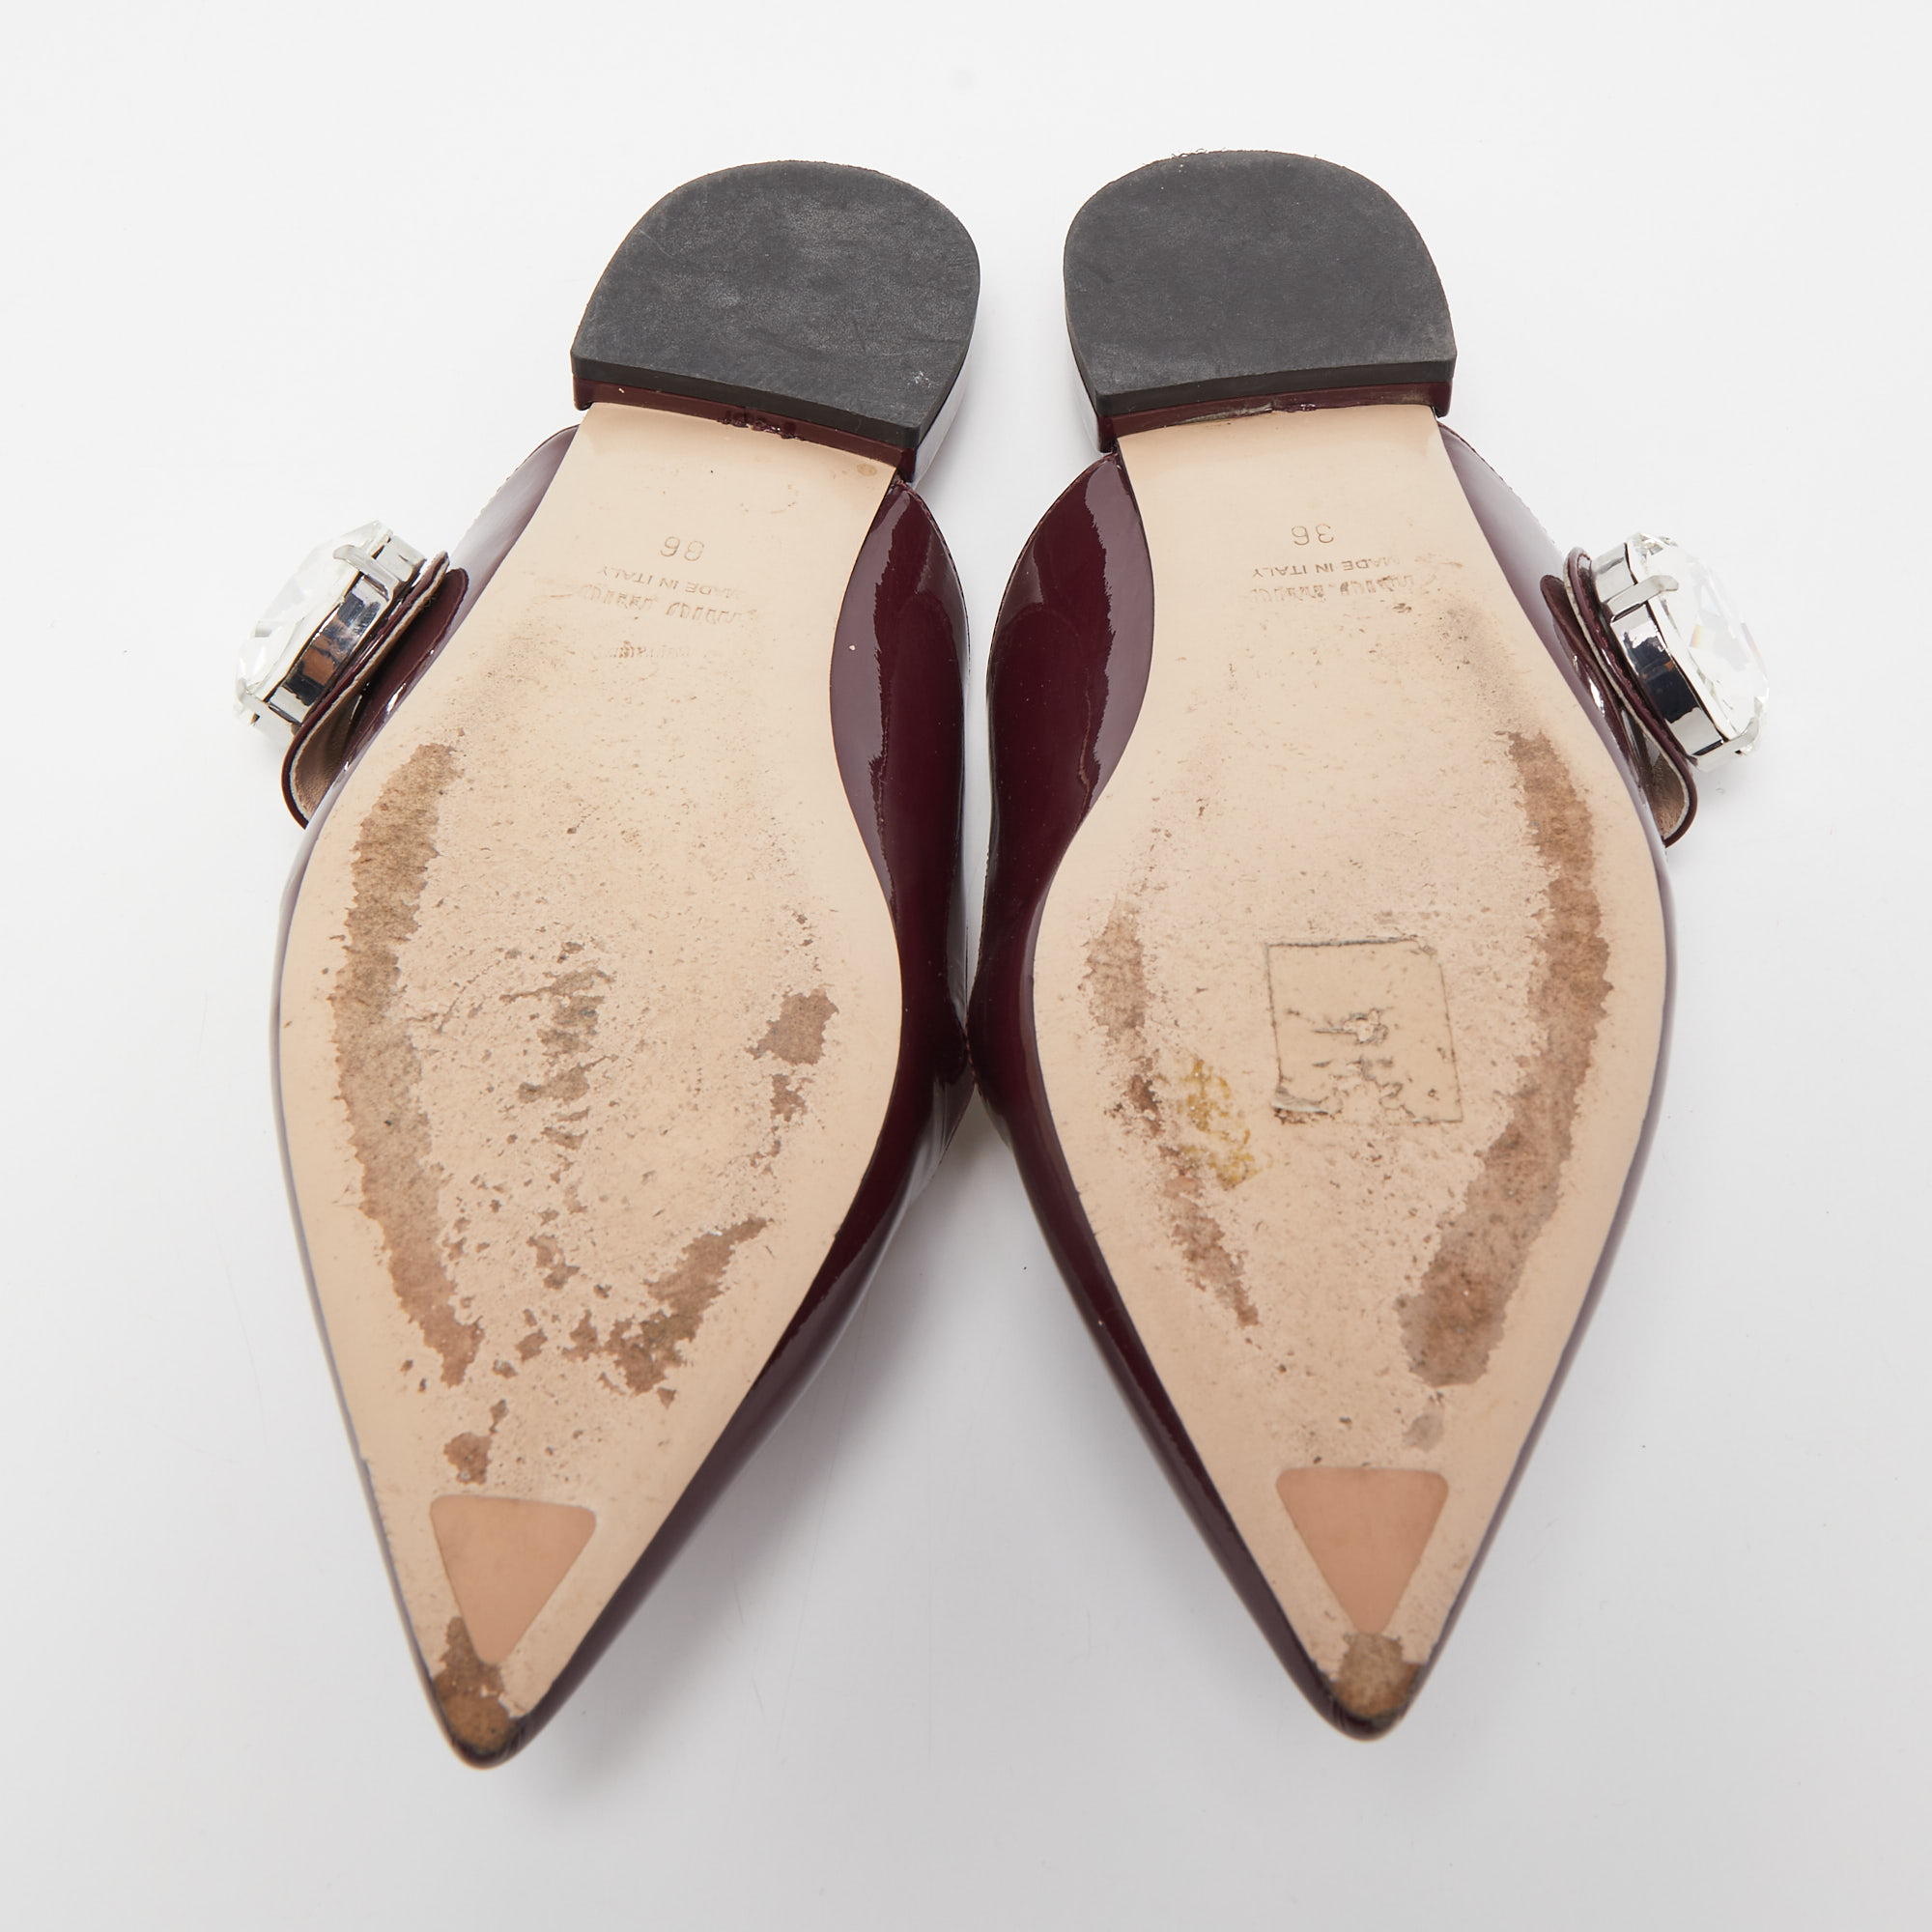 Miu Miu Burgundy Patent Leather Embellished Pointed Toe Mules Size 36